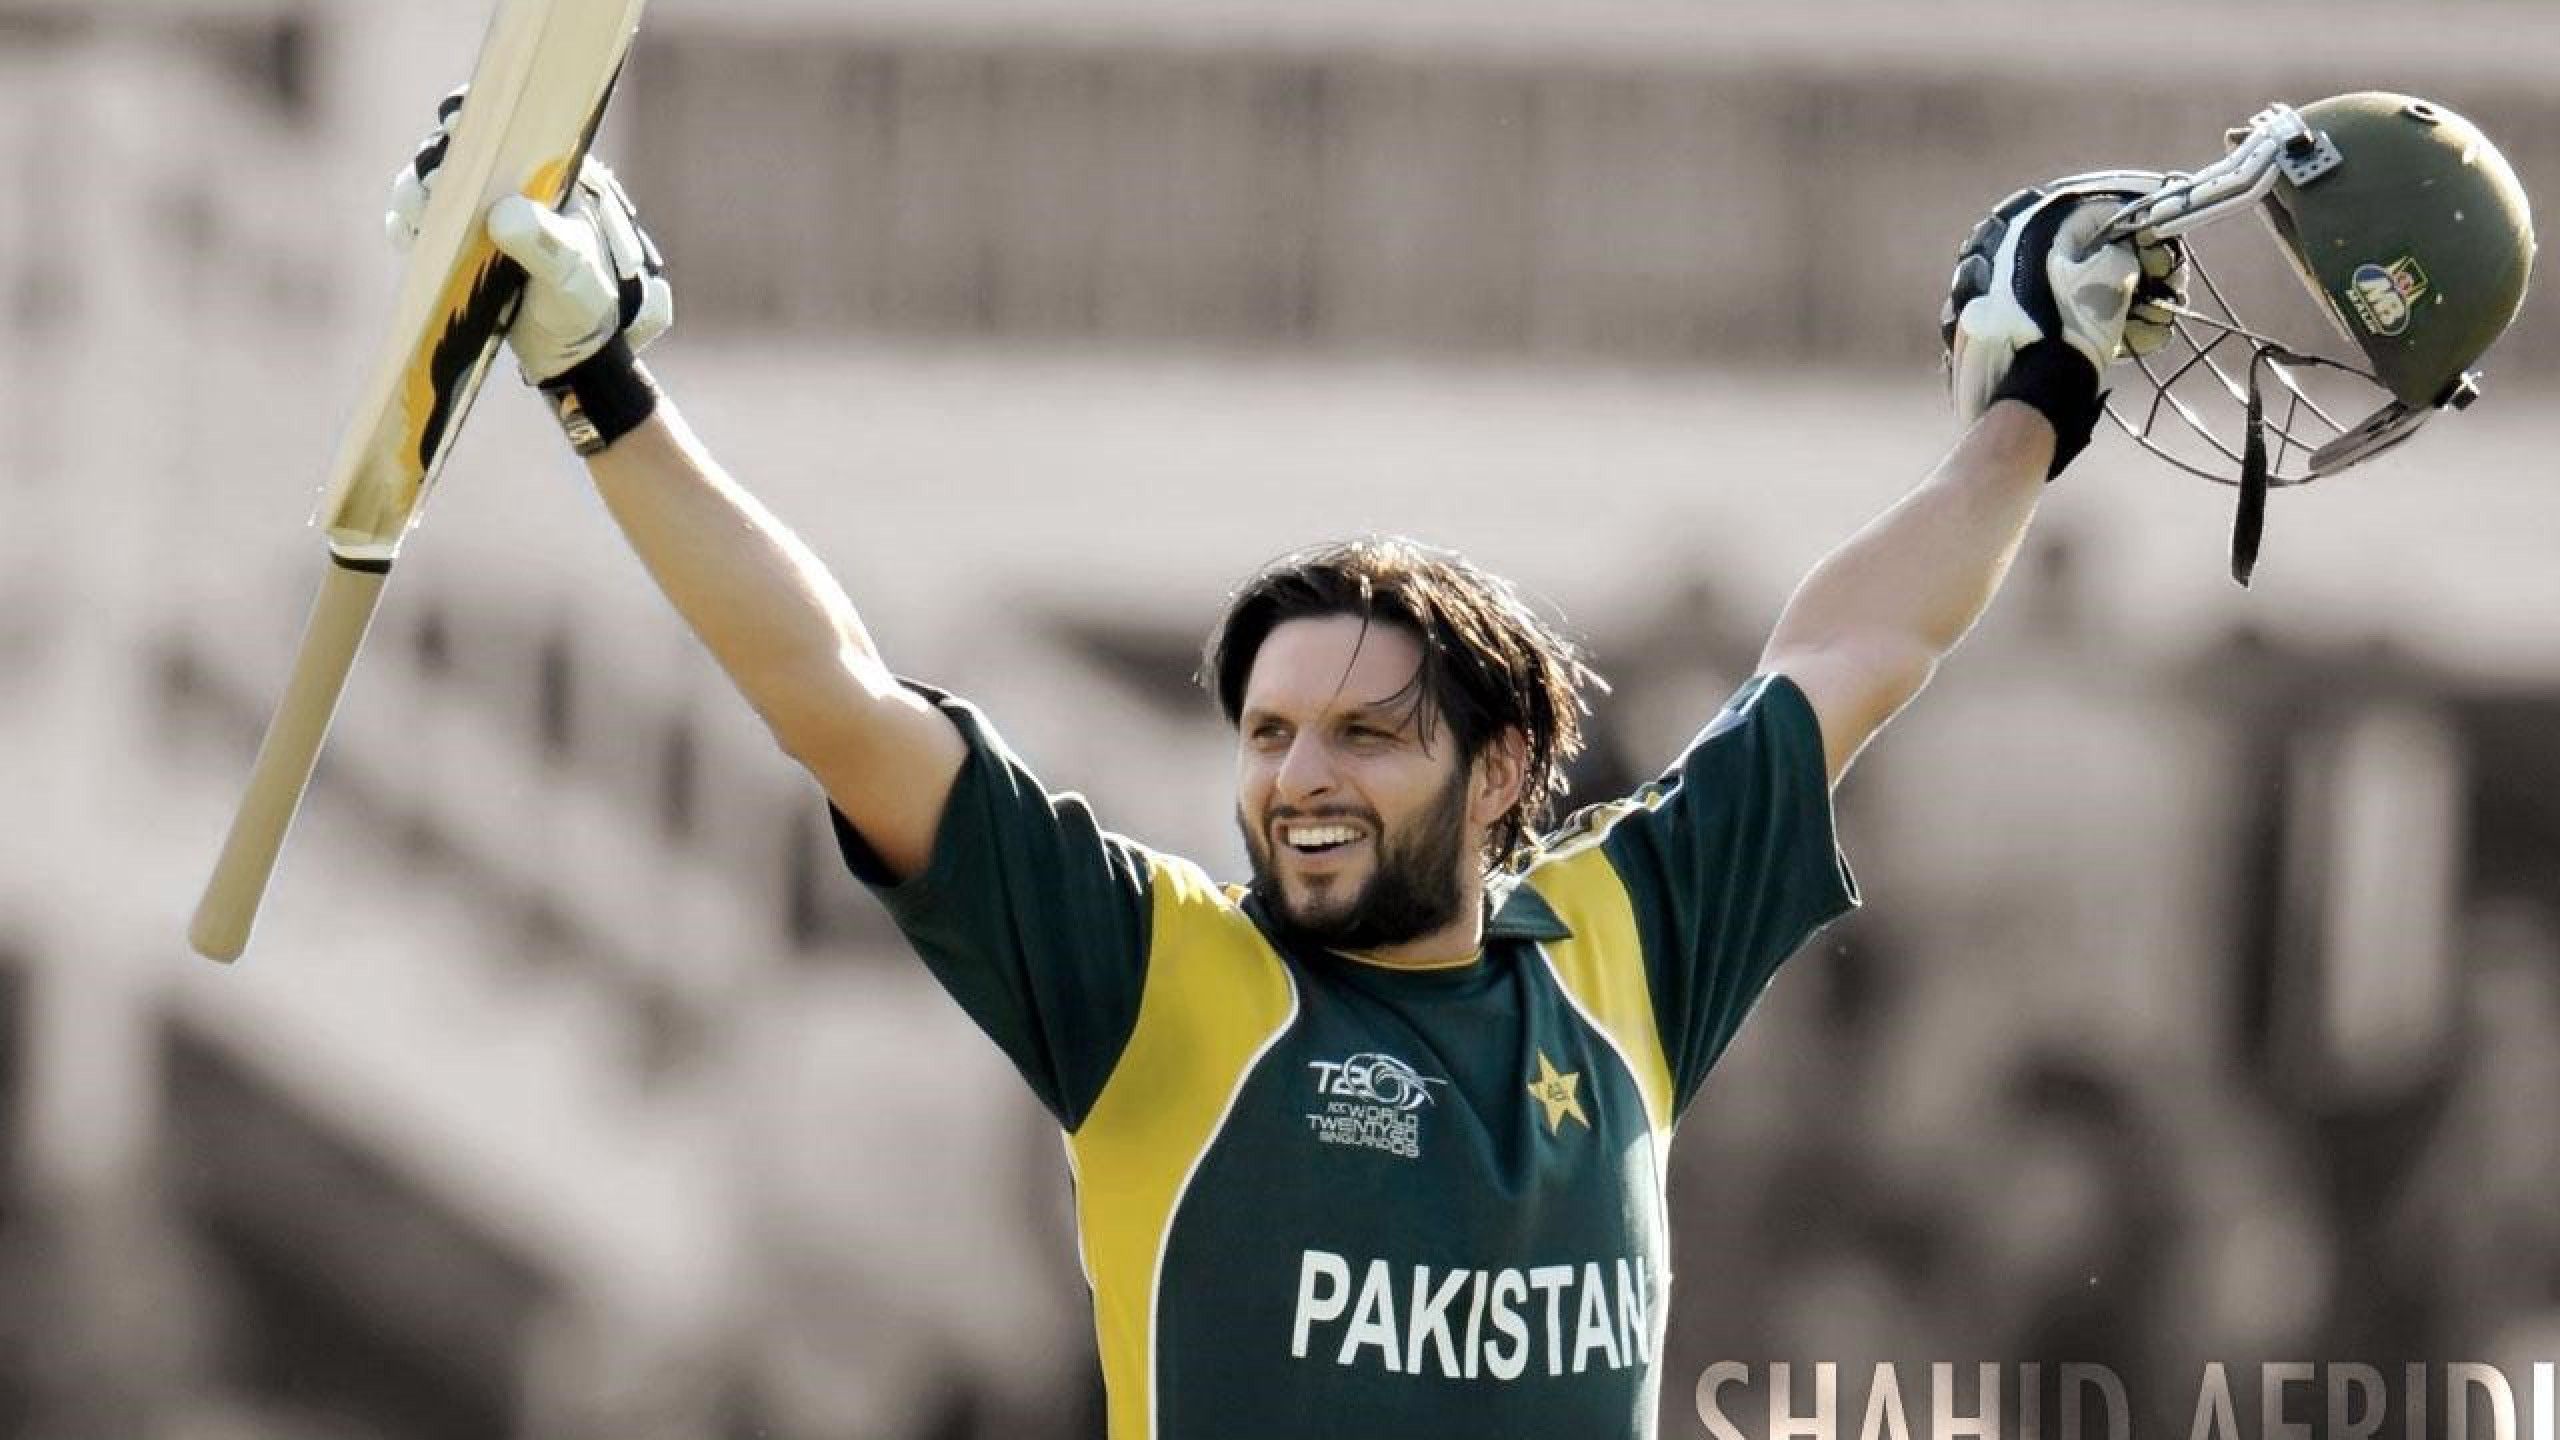 Download 2560x1440 Pakistan Cricket Player Shahid Afridi Celebrates in One Day International Match Photo wallpaper